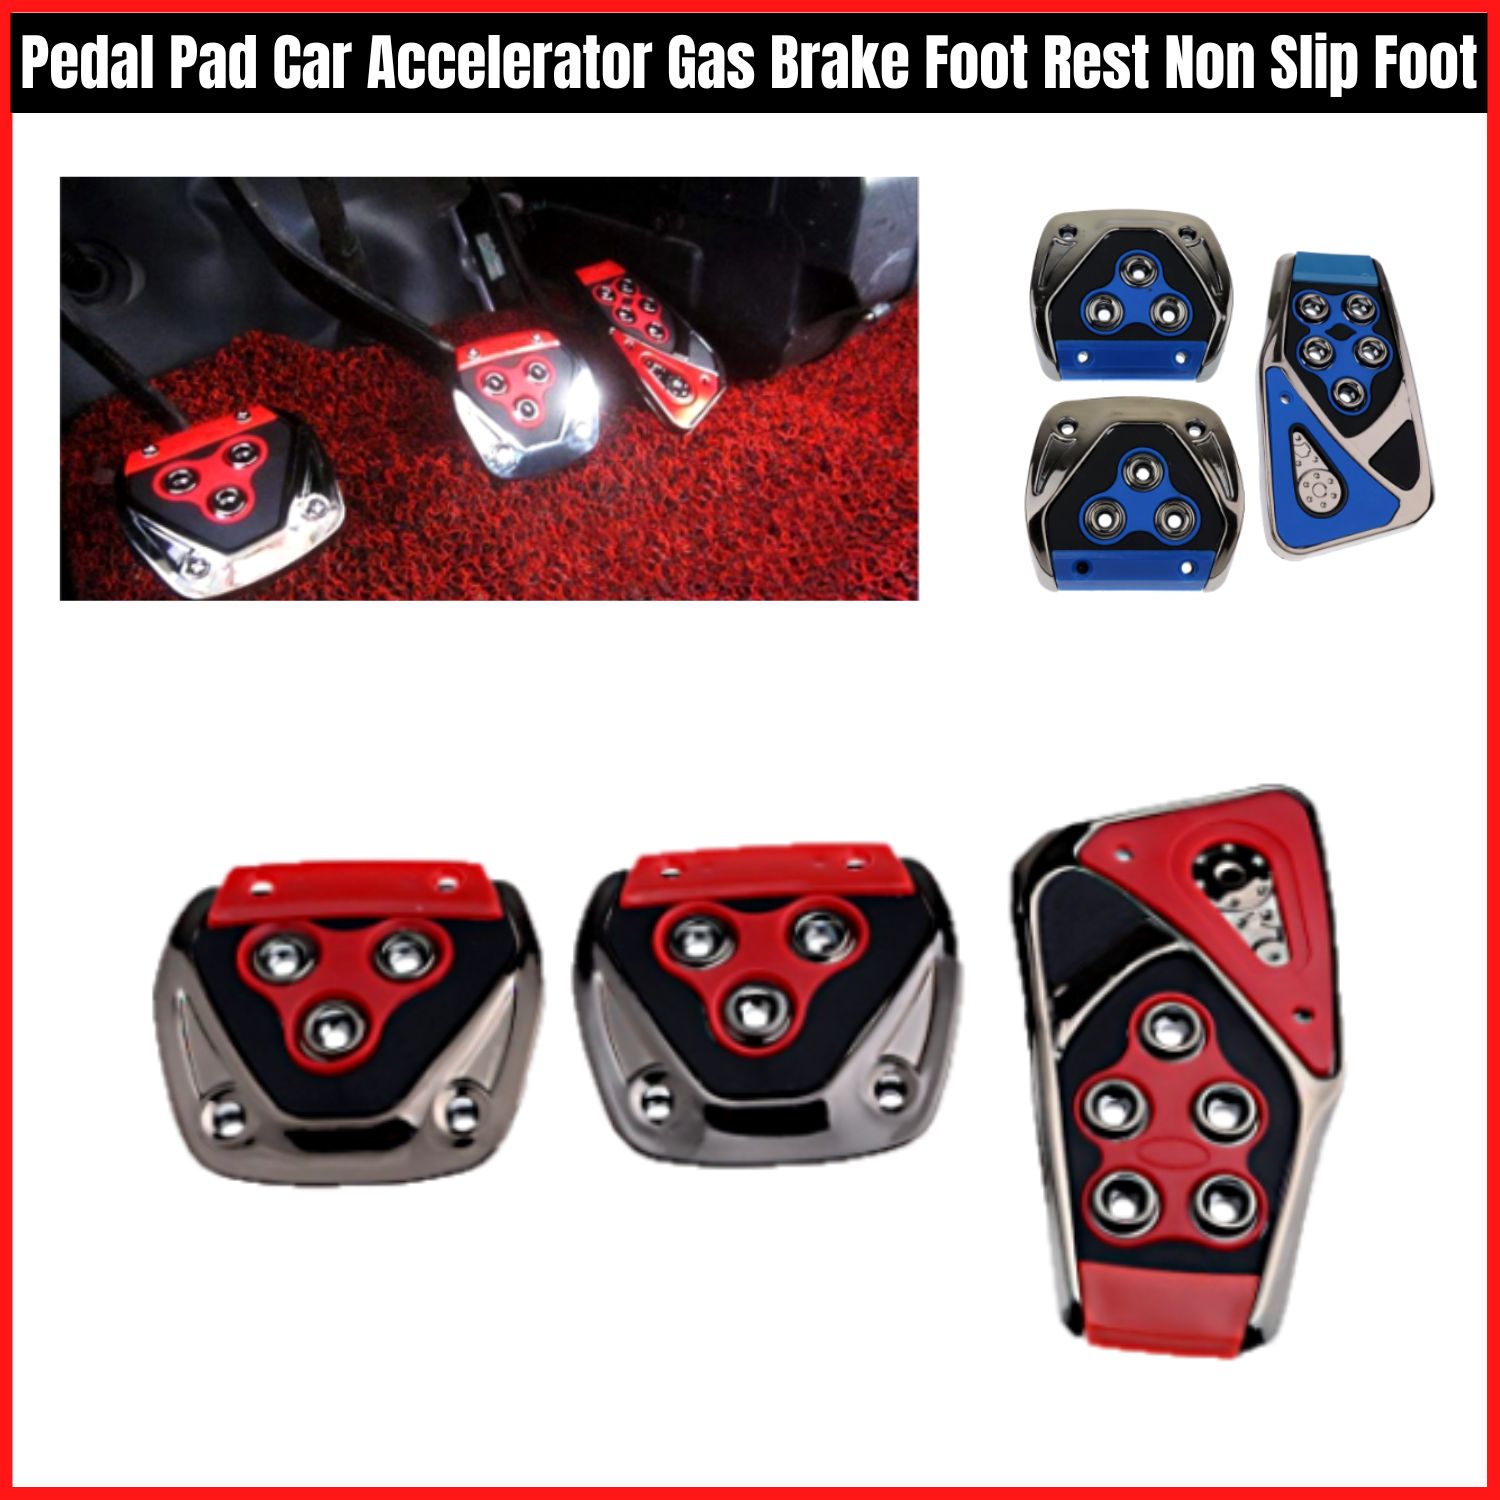 Pedal Pad Car Accelerator Gas Brake Foot Rest Non Slip Foot